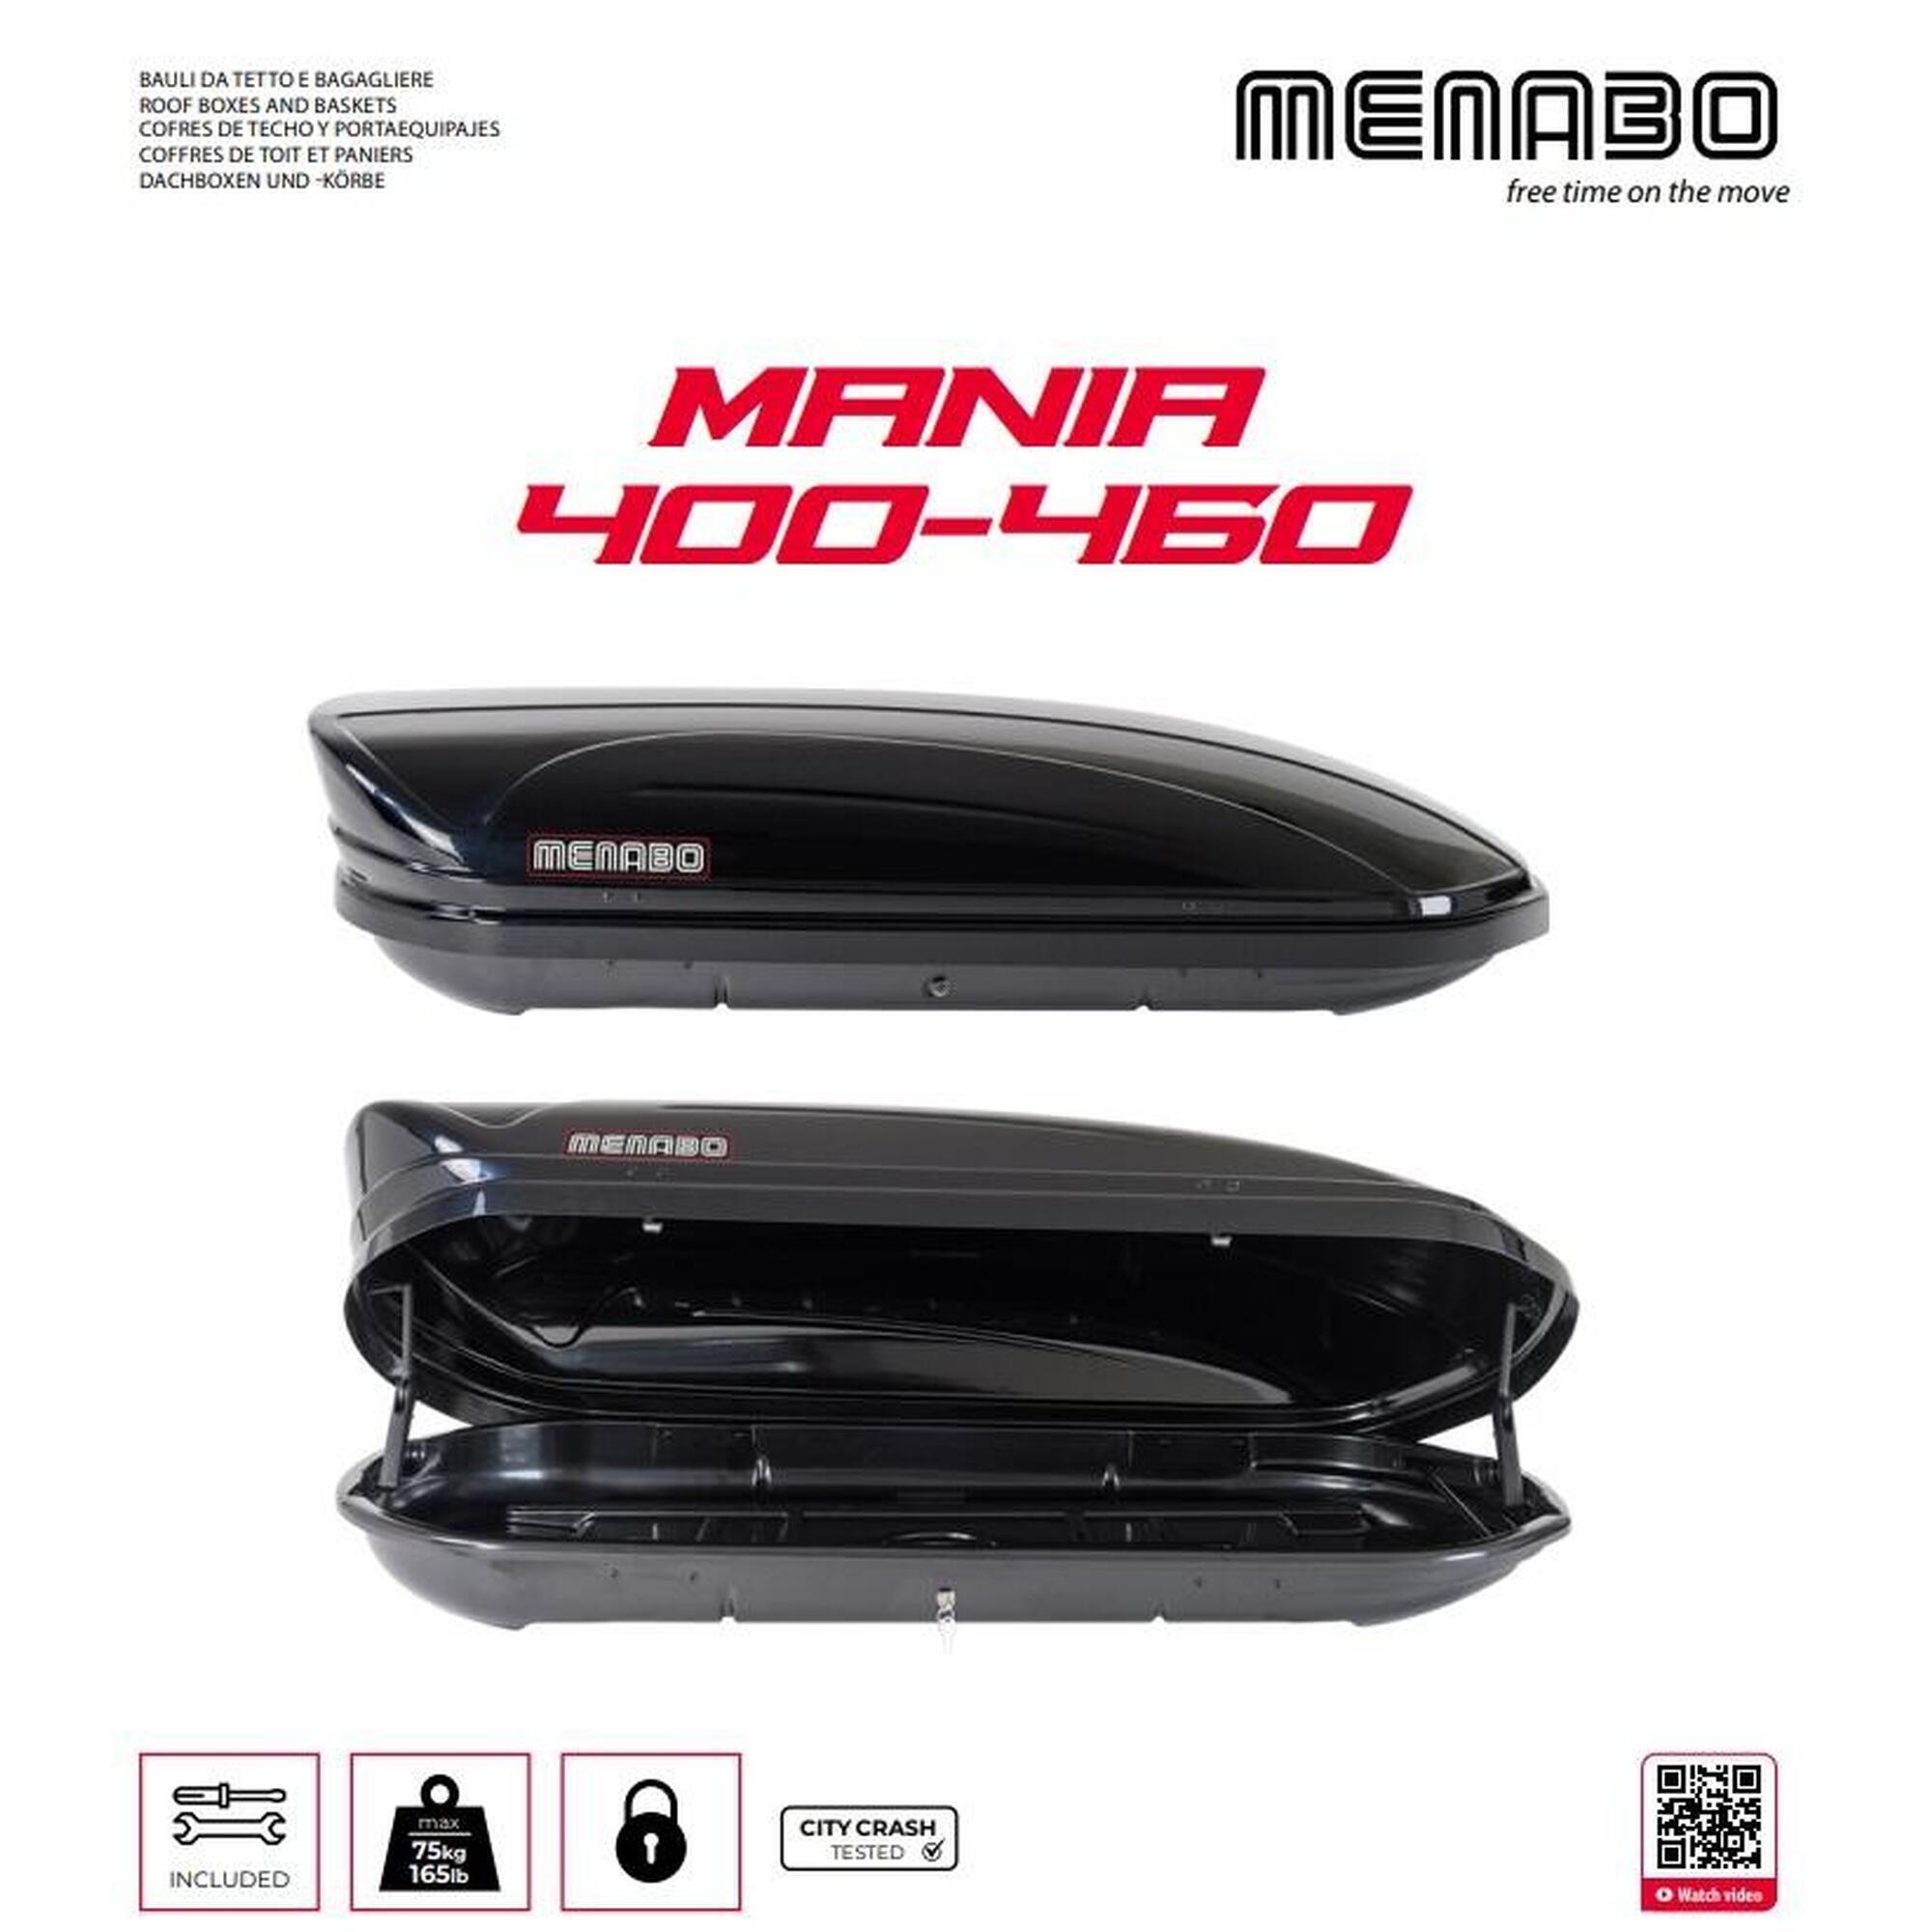 Cutie portbagaj cu deschidere dubla Menabo Mania 460 DUO ABS Black, 198x79x37cm